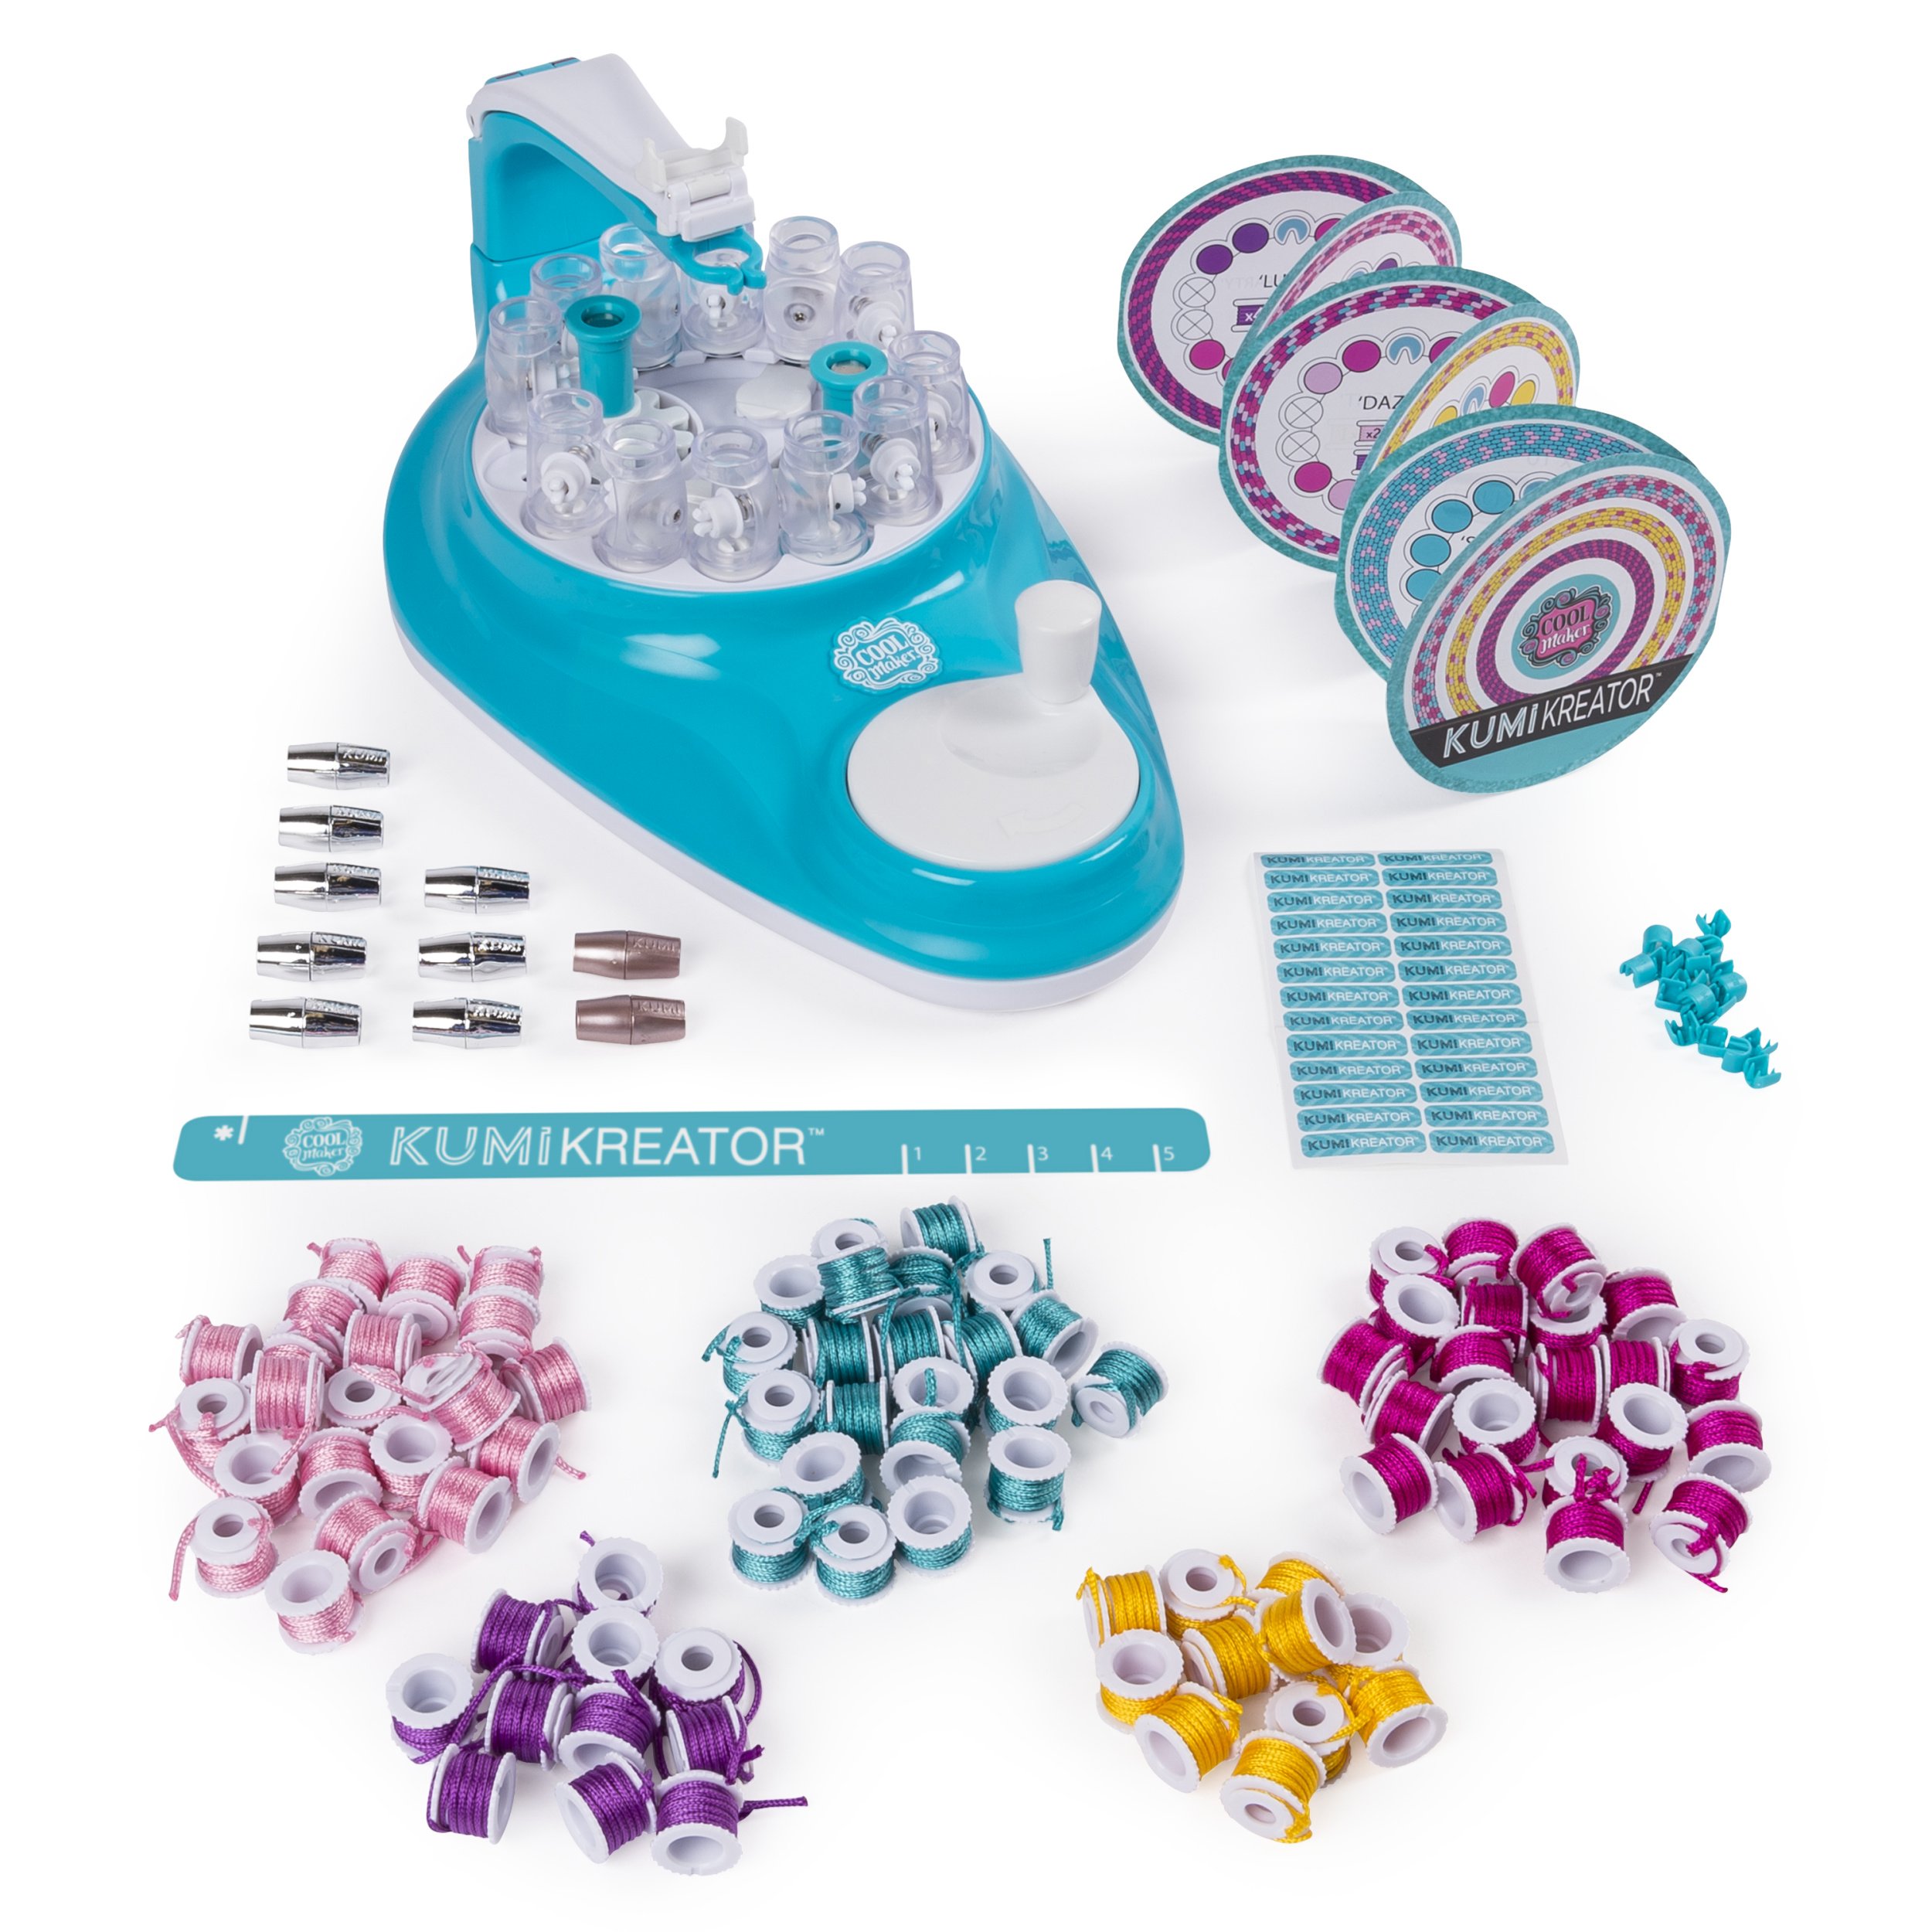 Cool Maker 6045336 KumiKreator Friendship Bracelet Maker, Quick & Easy Activity Kit for Kids, Ages 8 and Up